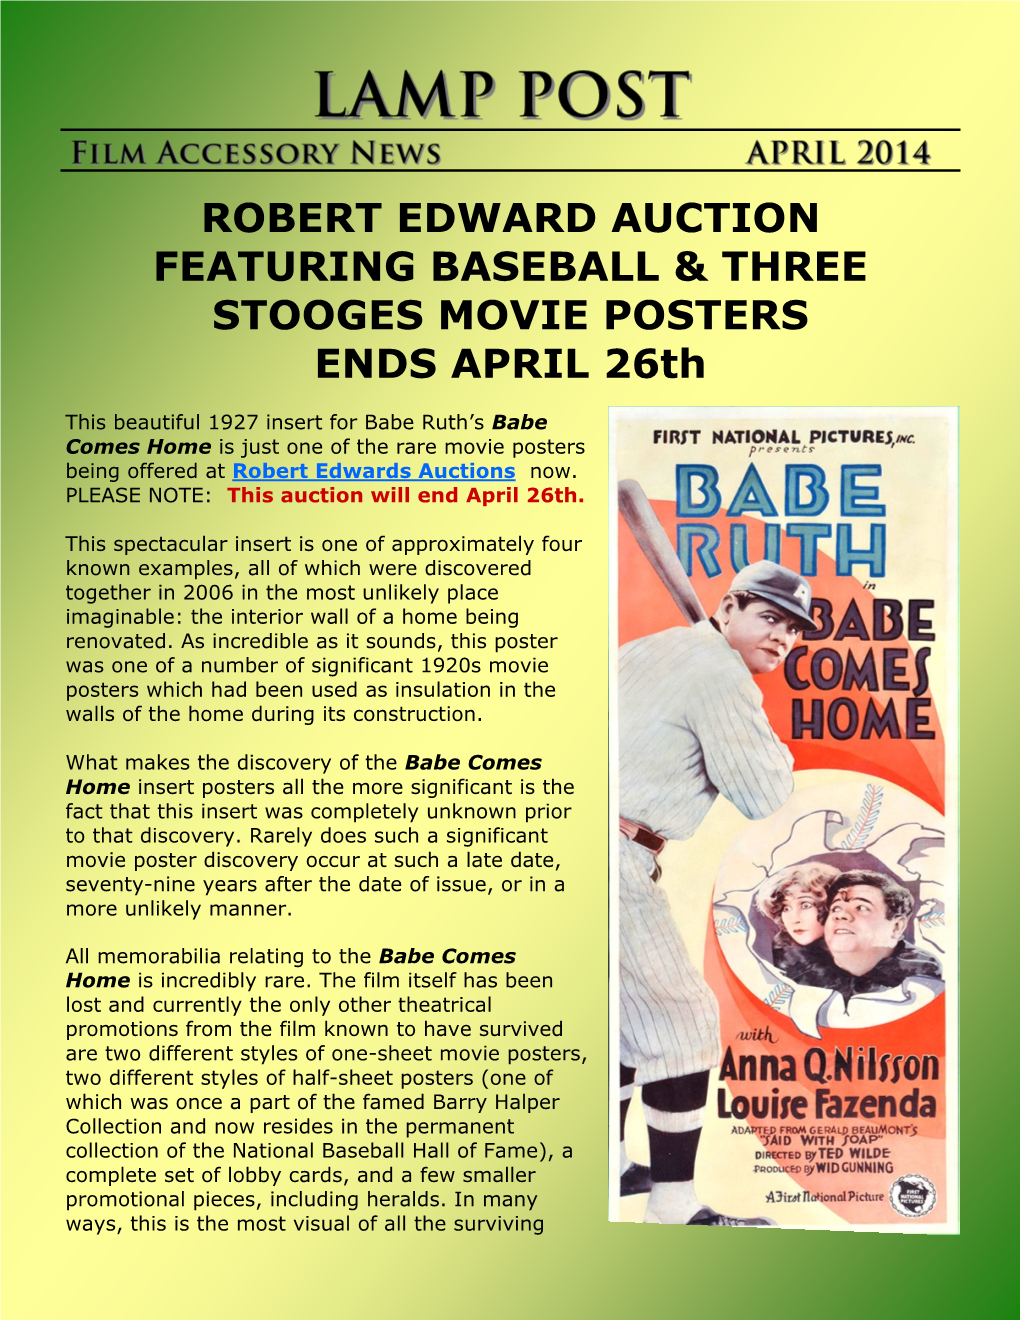 Robert Edward Auction Featuring Baseball & Three